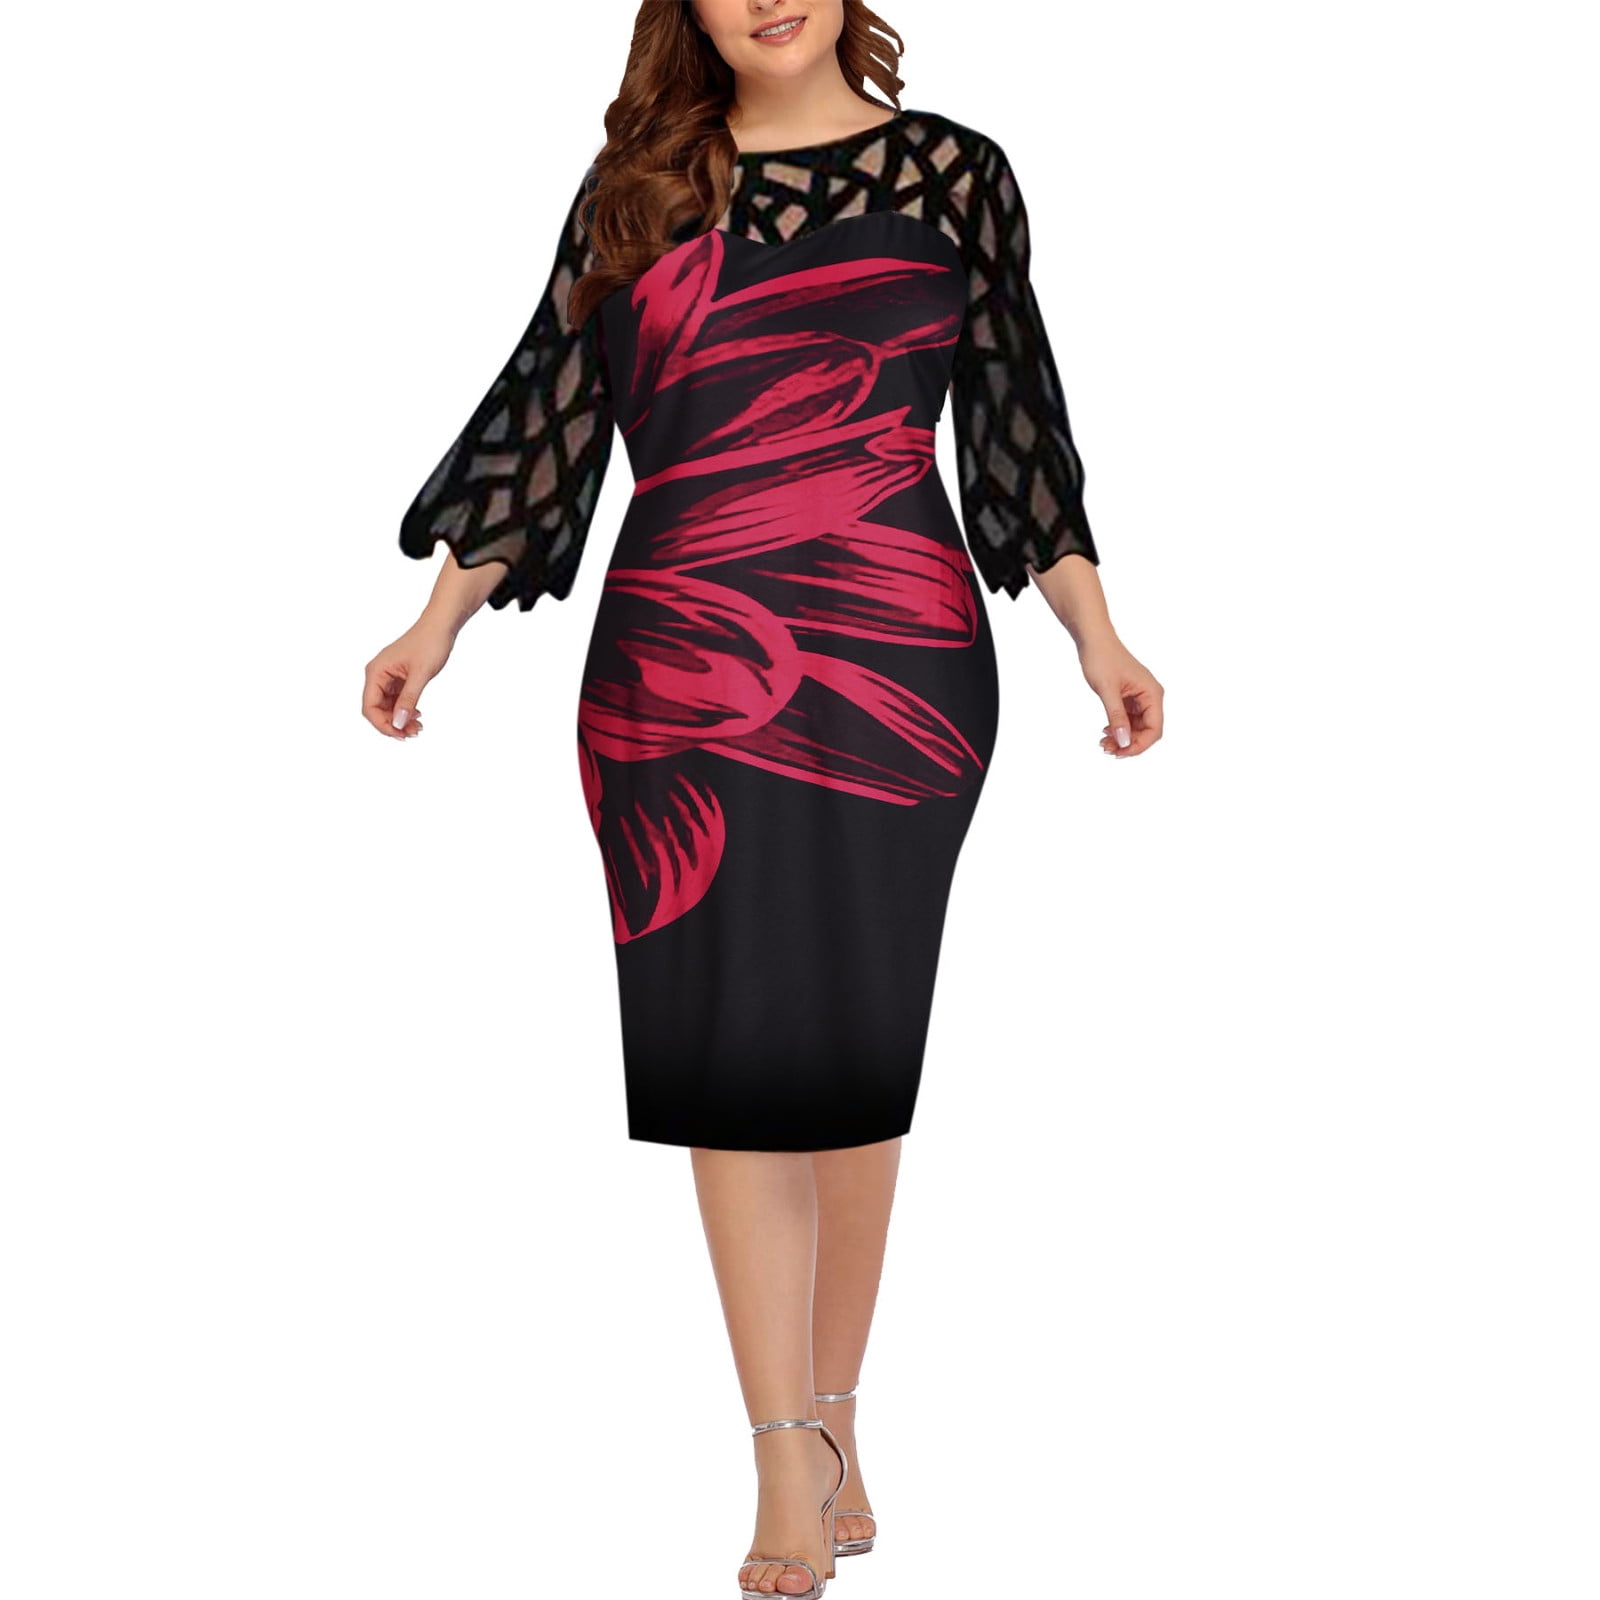 Hfyihgf Elegant Plus Size Dresses for Women Flare Lace Mesh 3/4 Sleeves ...